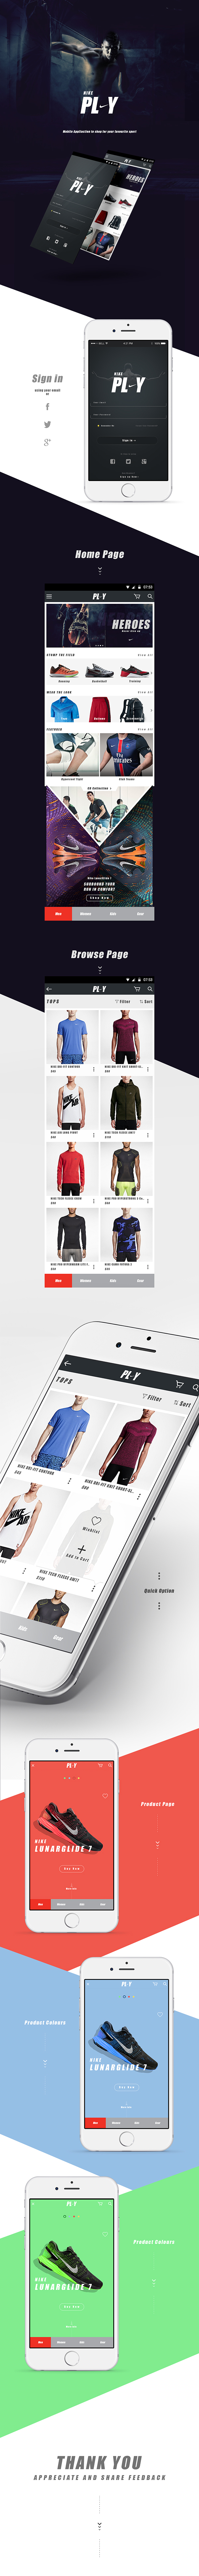 Nike Play : Shopping App